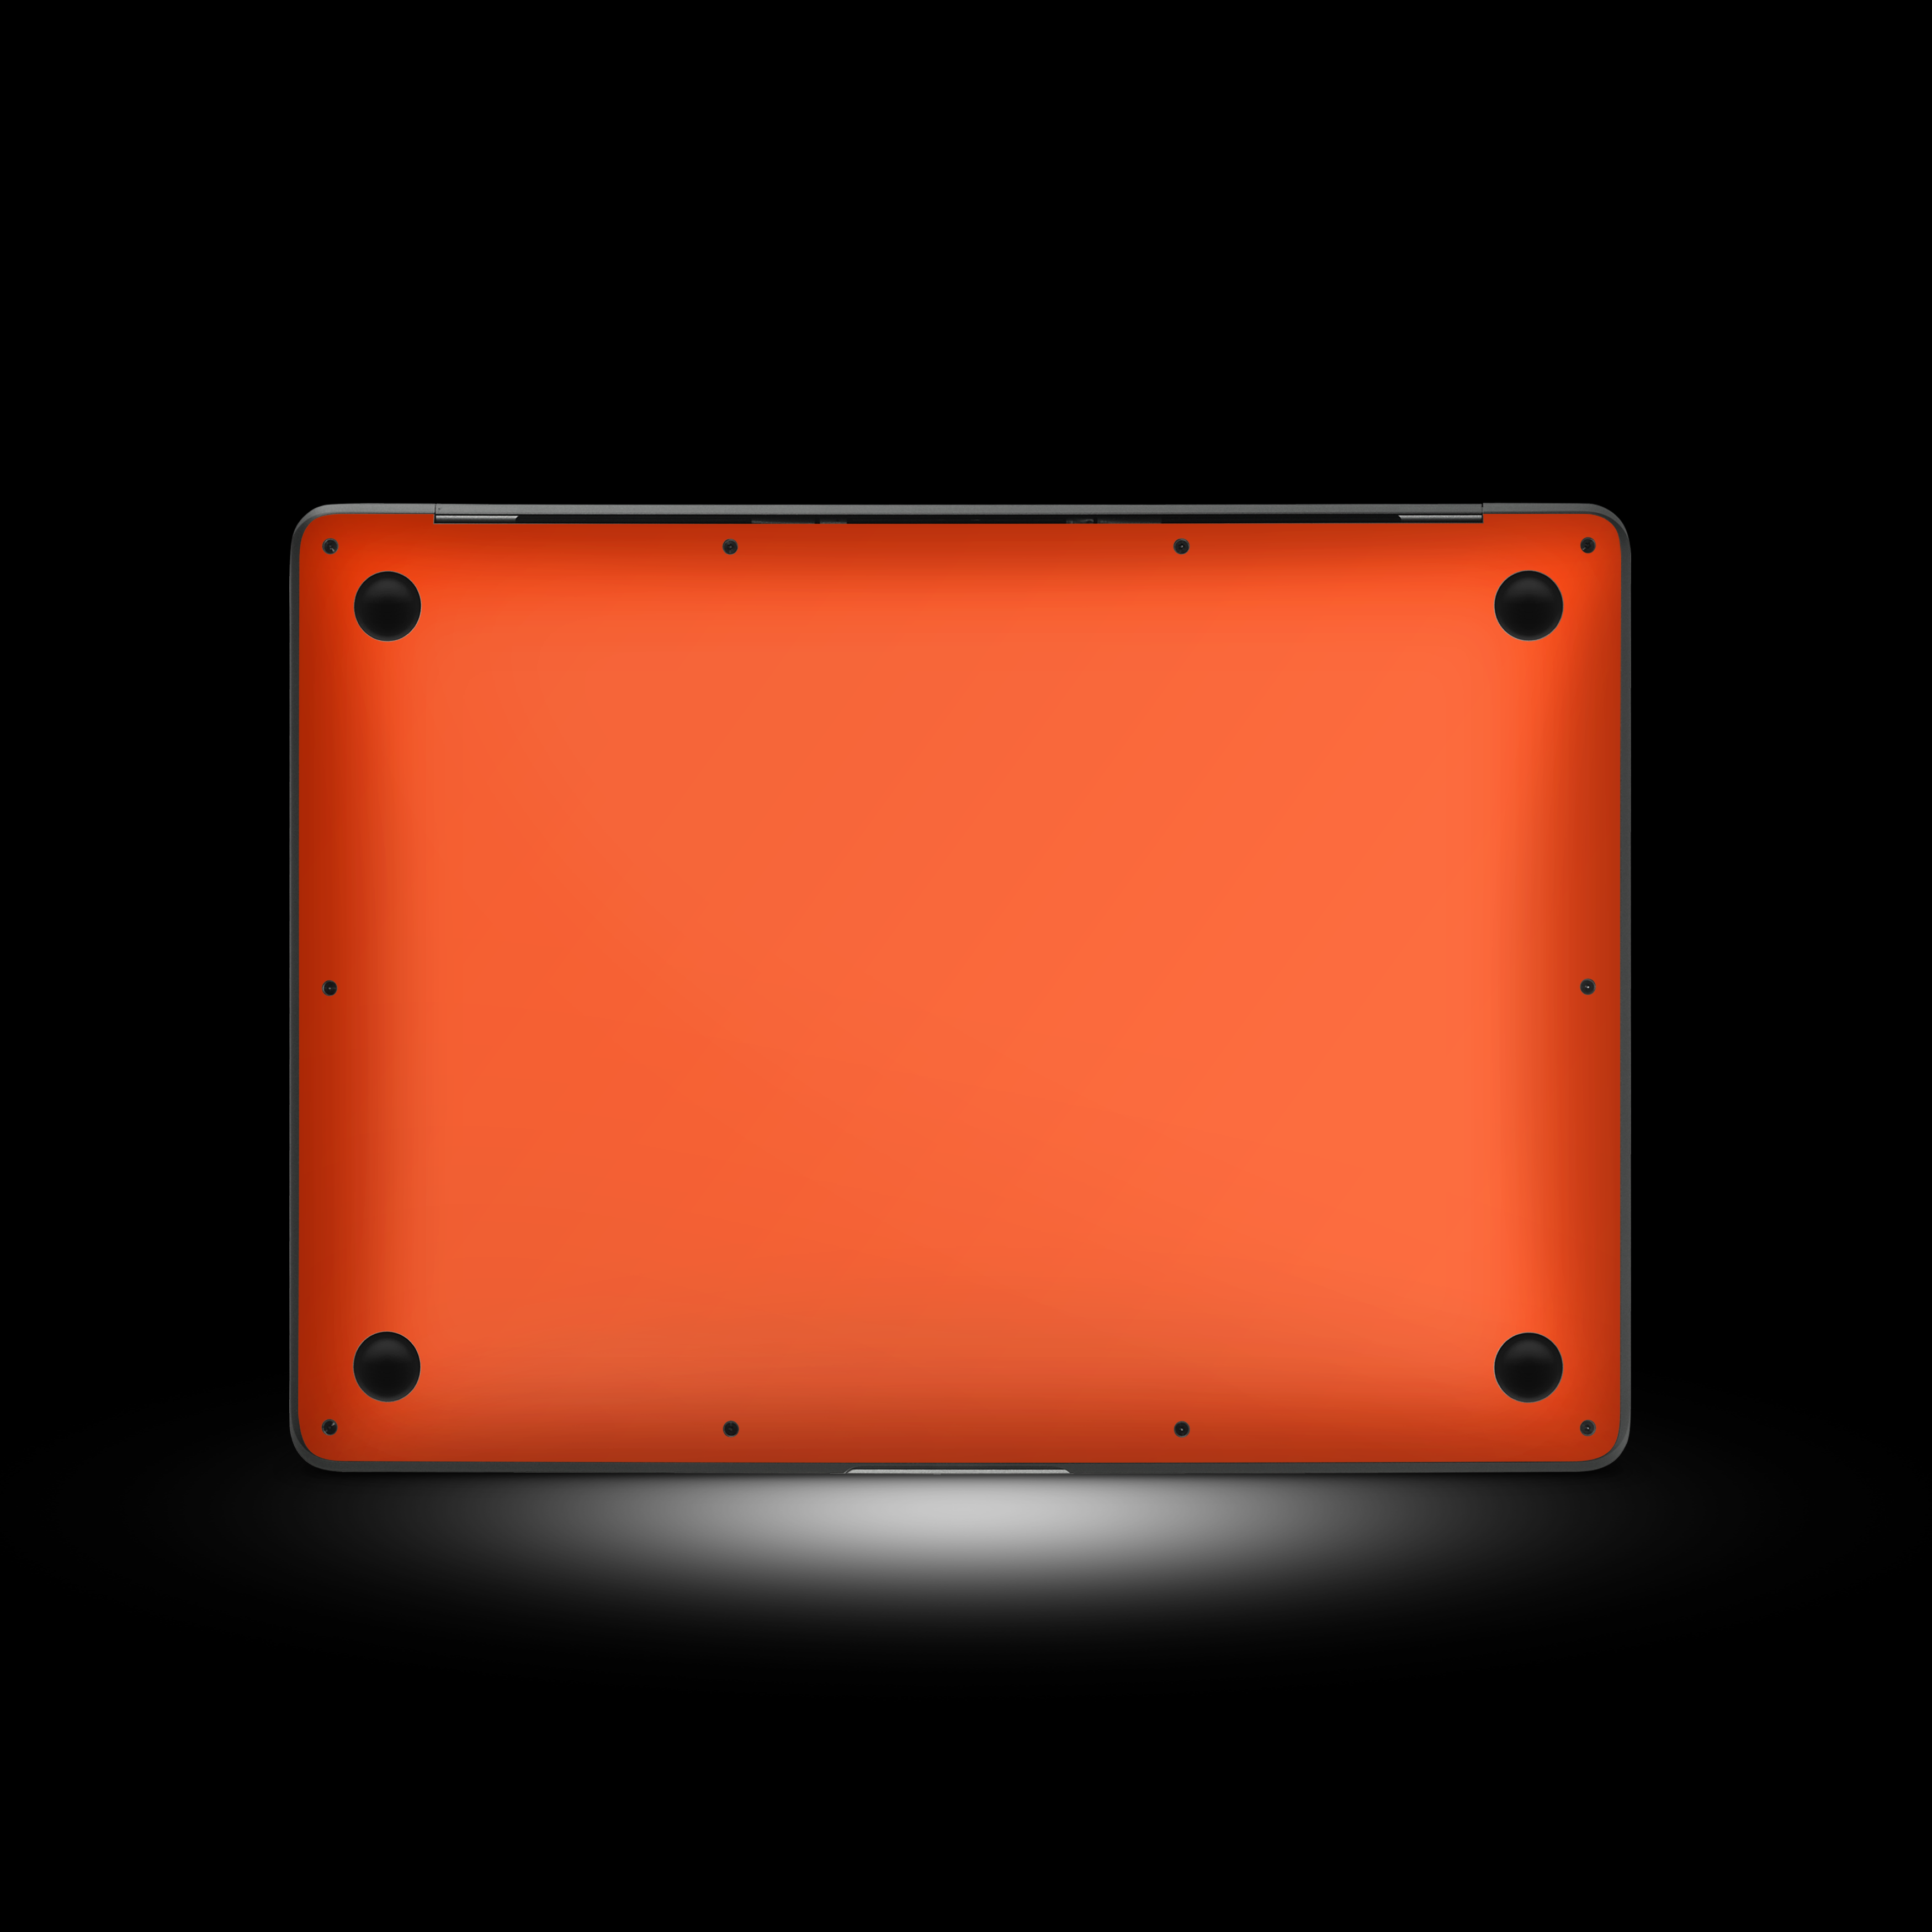 Neon Orange (MacBook Skin)